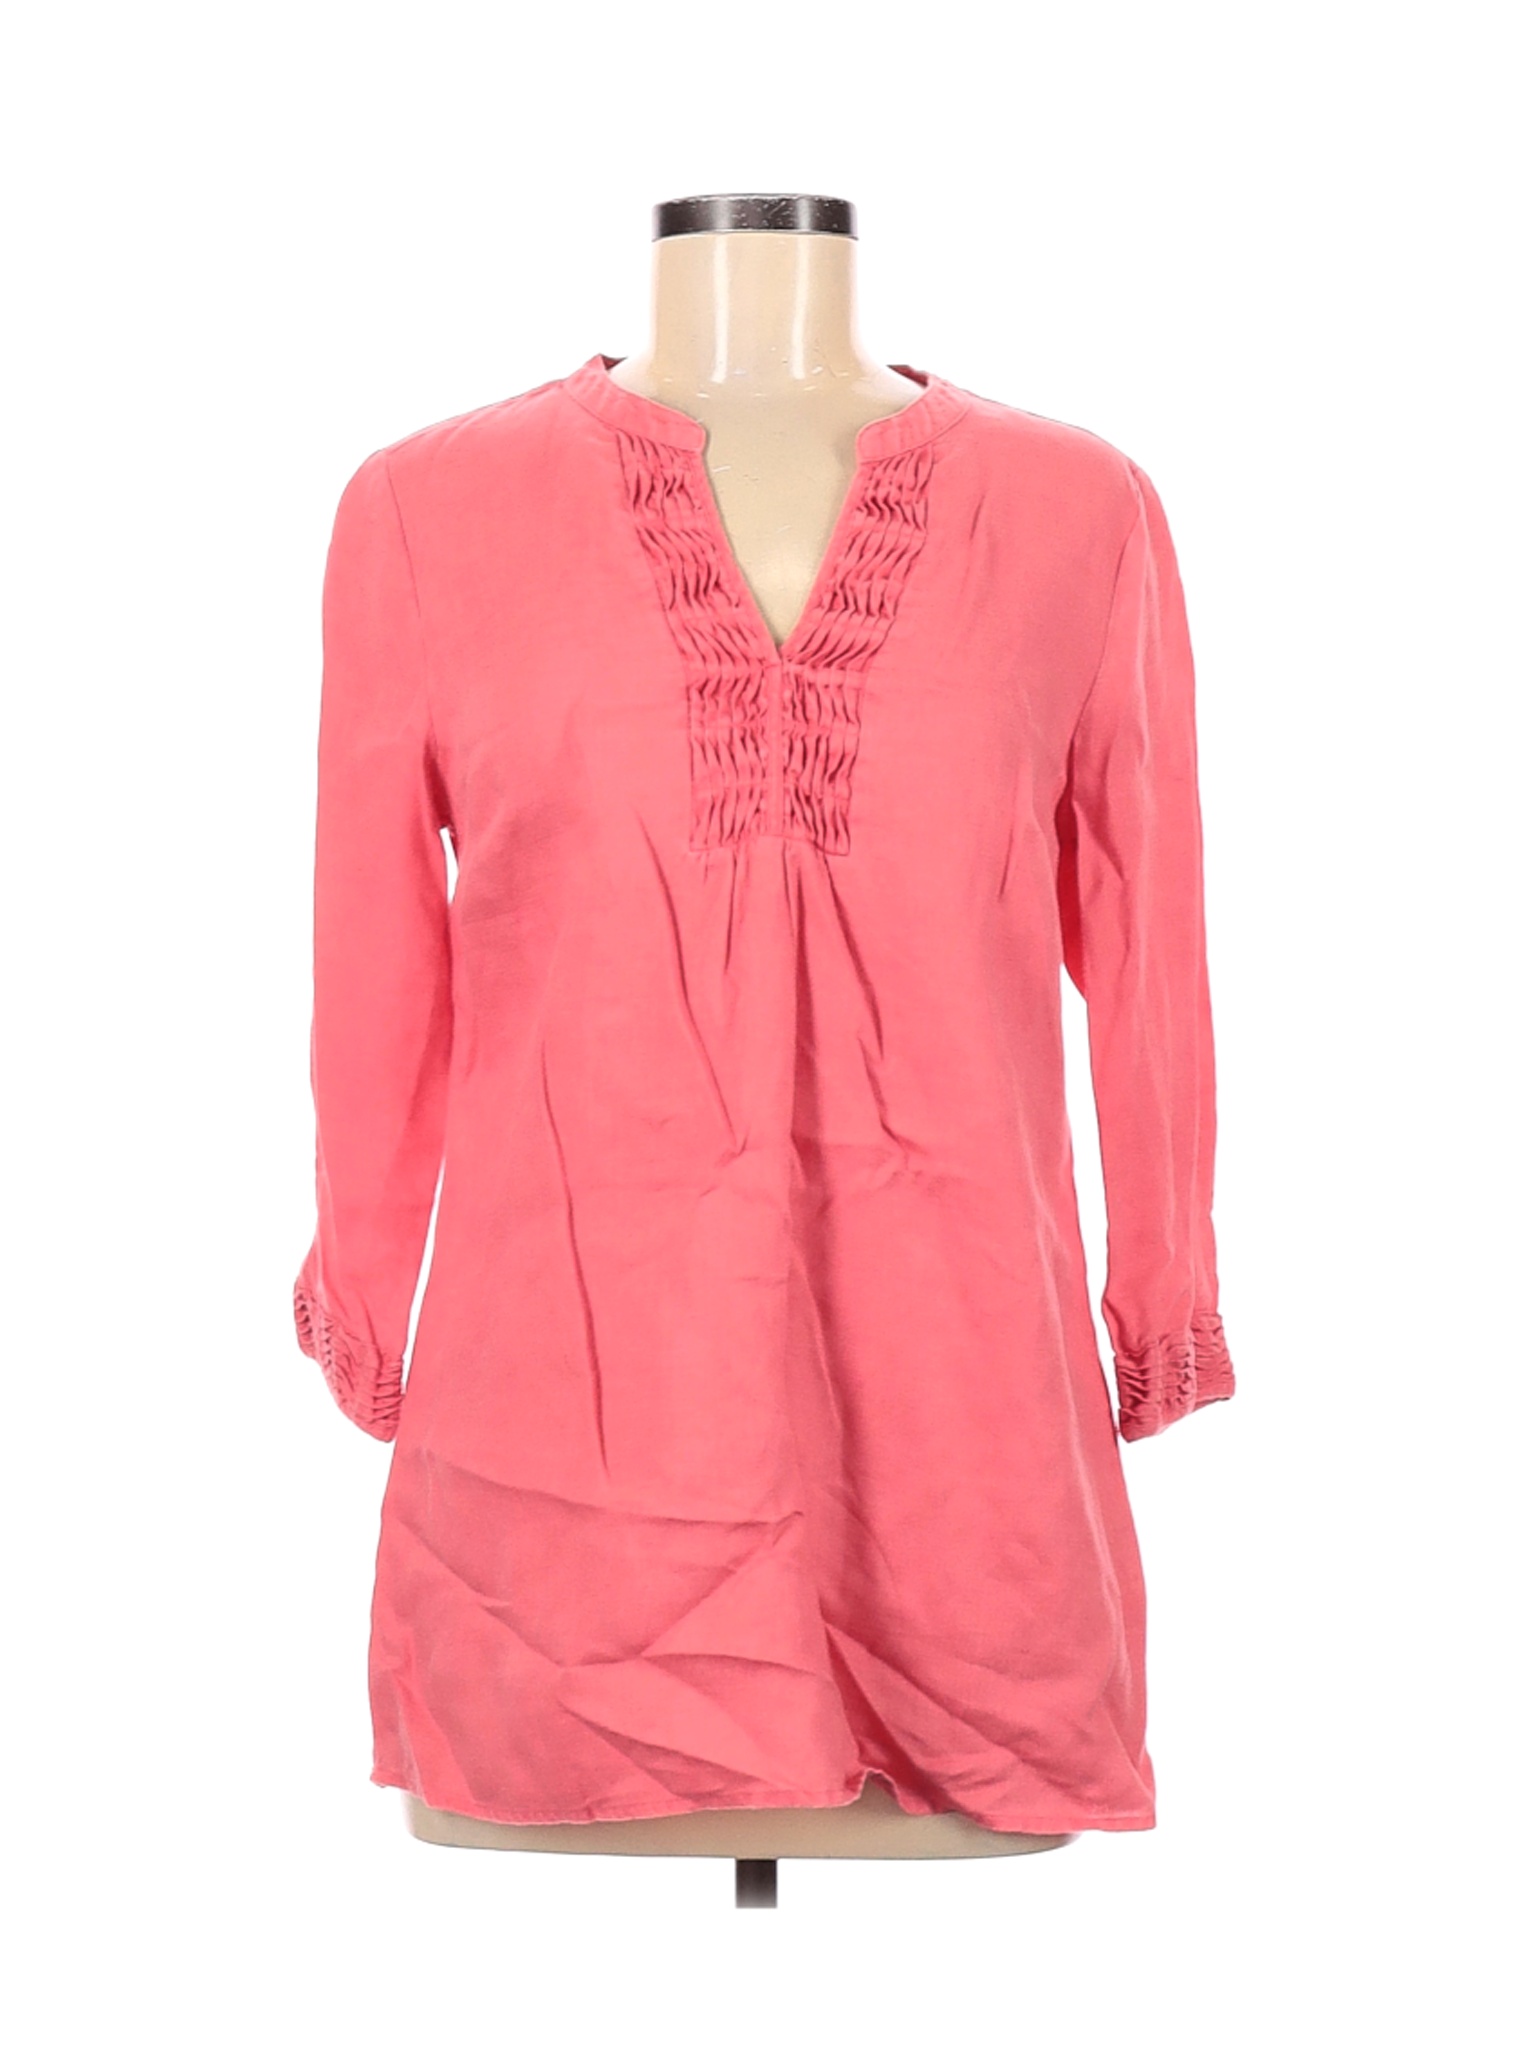 Boden Women Pink 3/4 Sleeve Blouse 6 | eBay